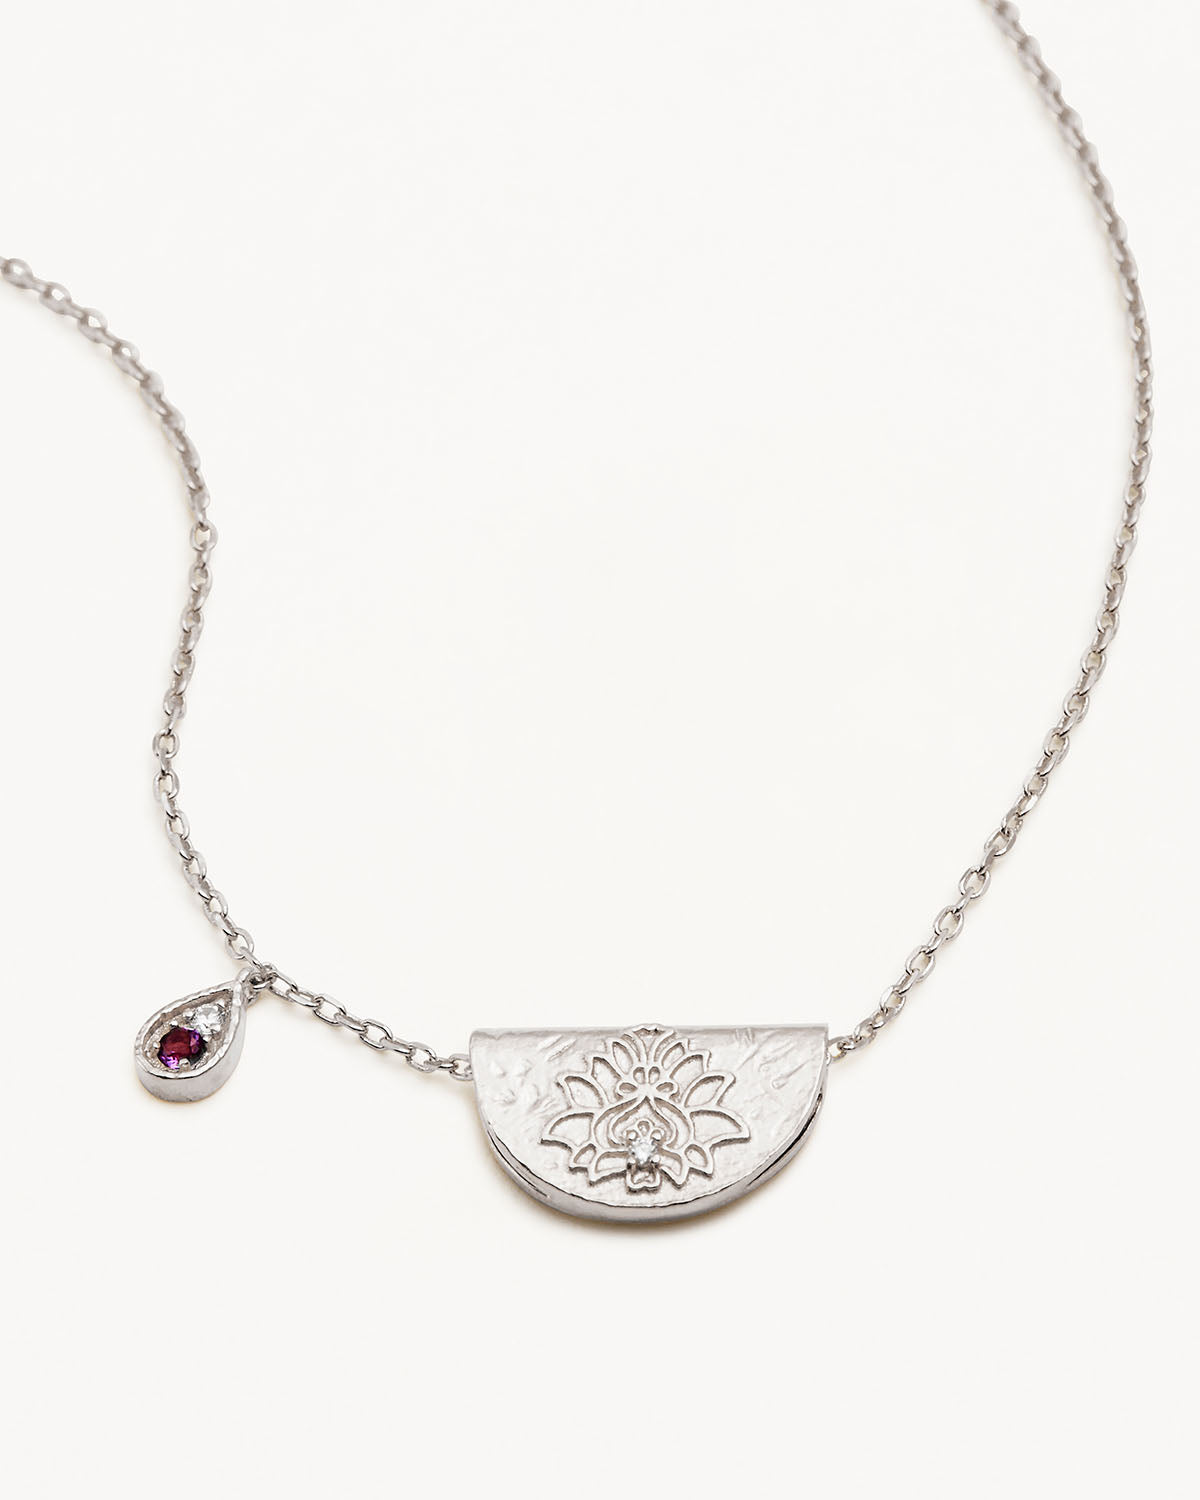 BOYA Love Knot Necklace Birthstone 925 Sterling Silver Pendant Jewelry